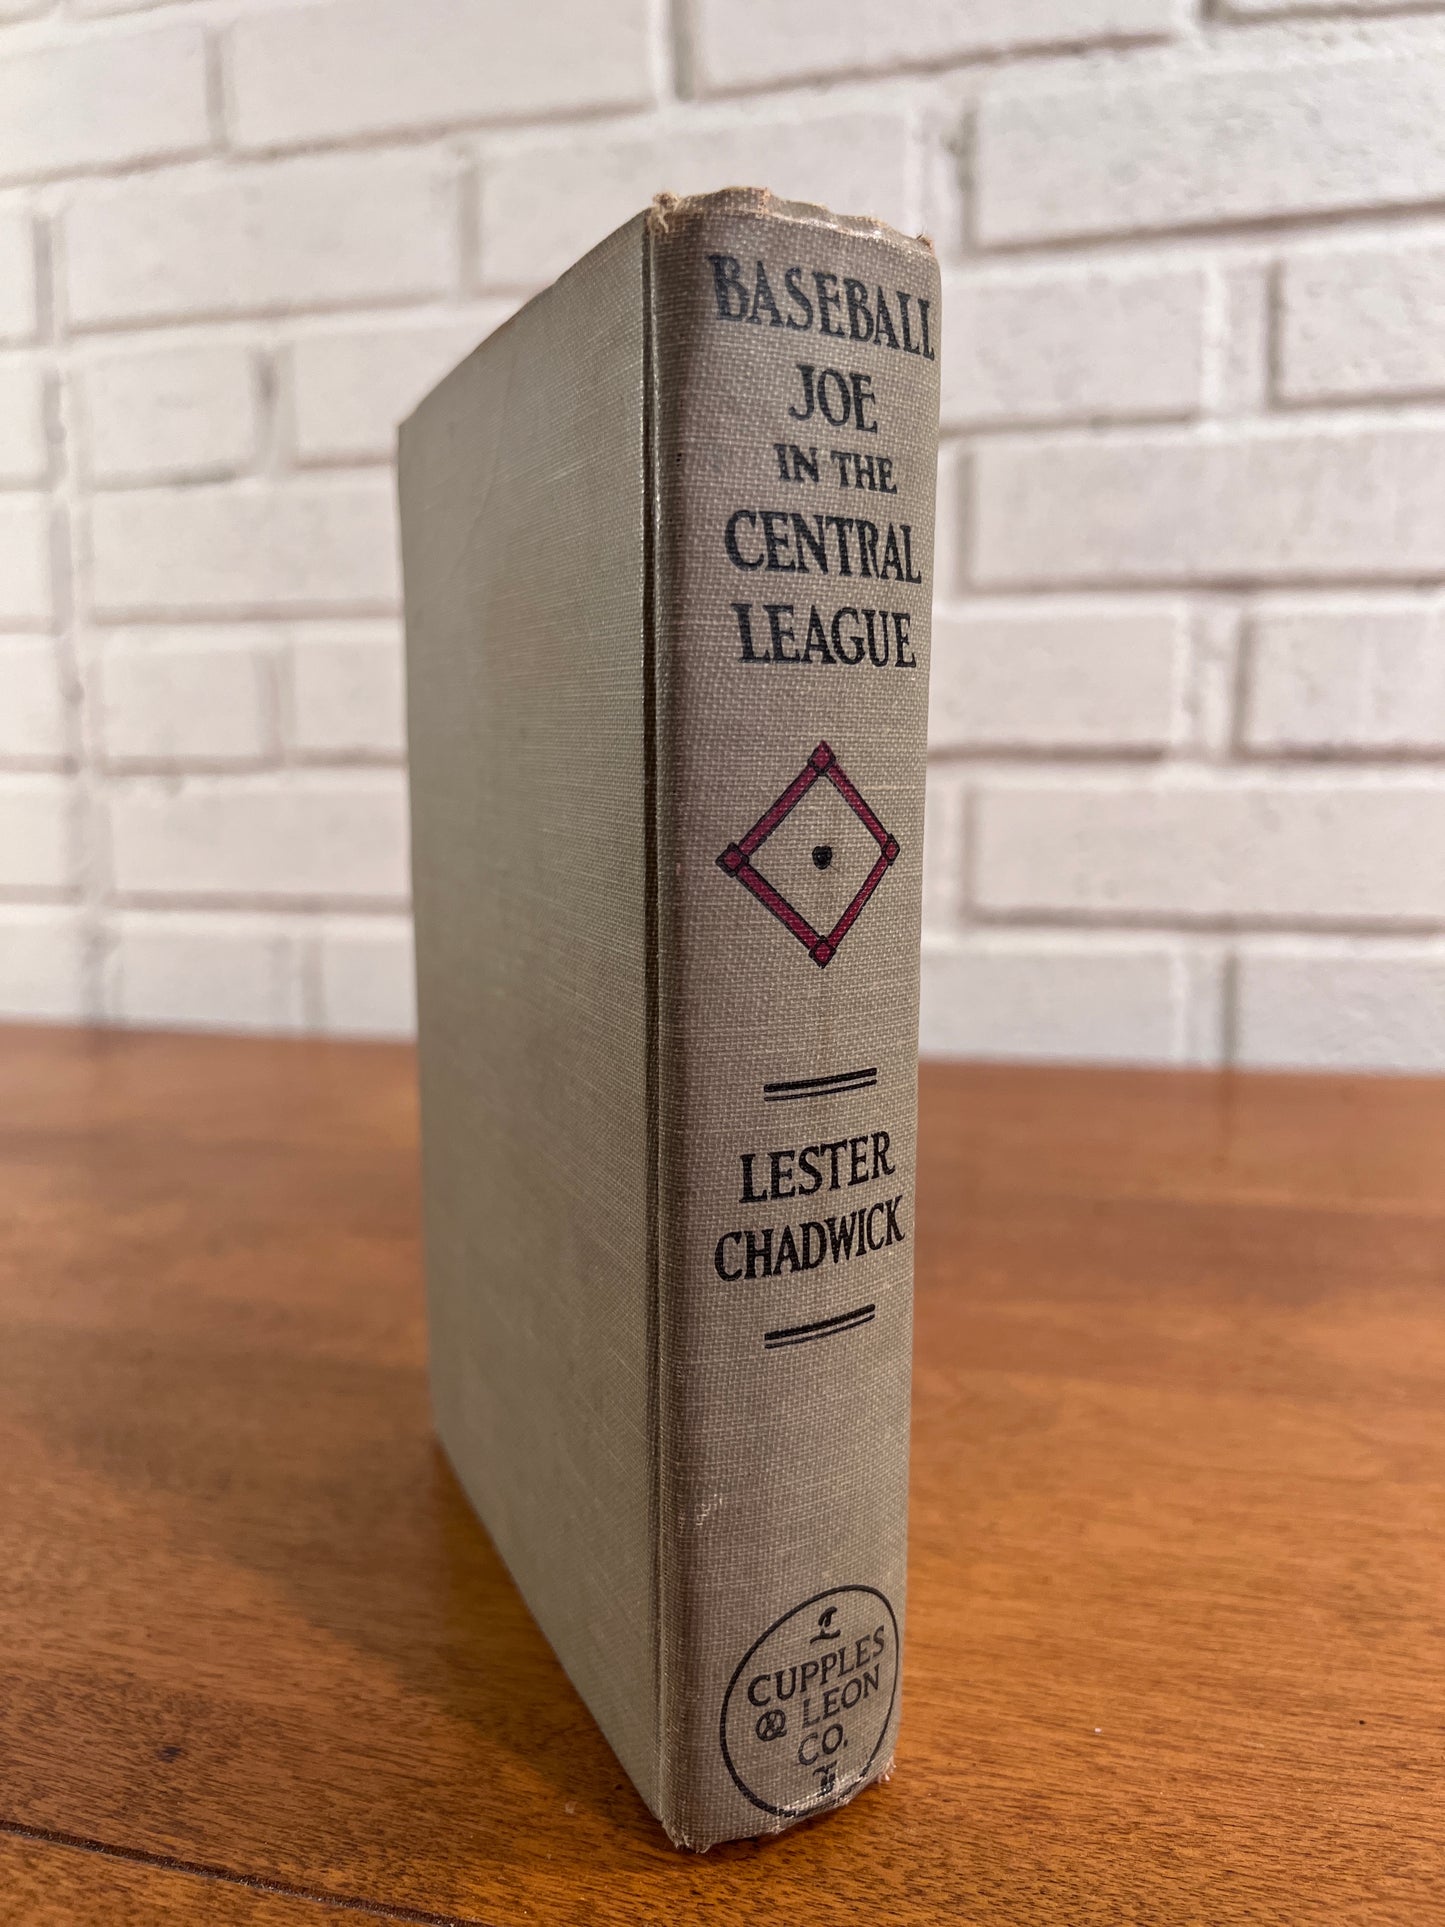 Baseball Joe In The Big League by Lester Chadwick 1914